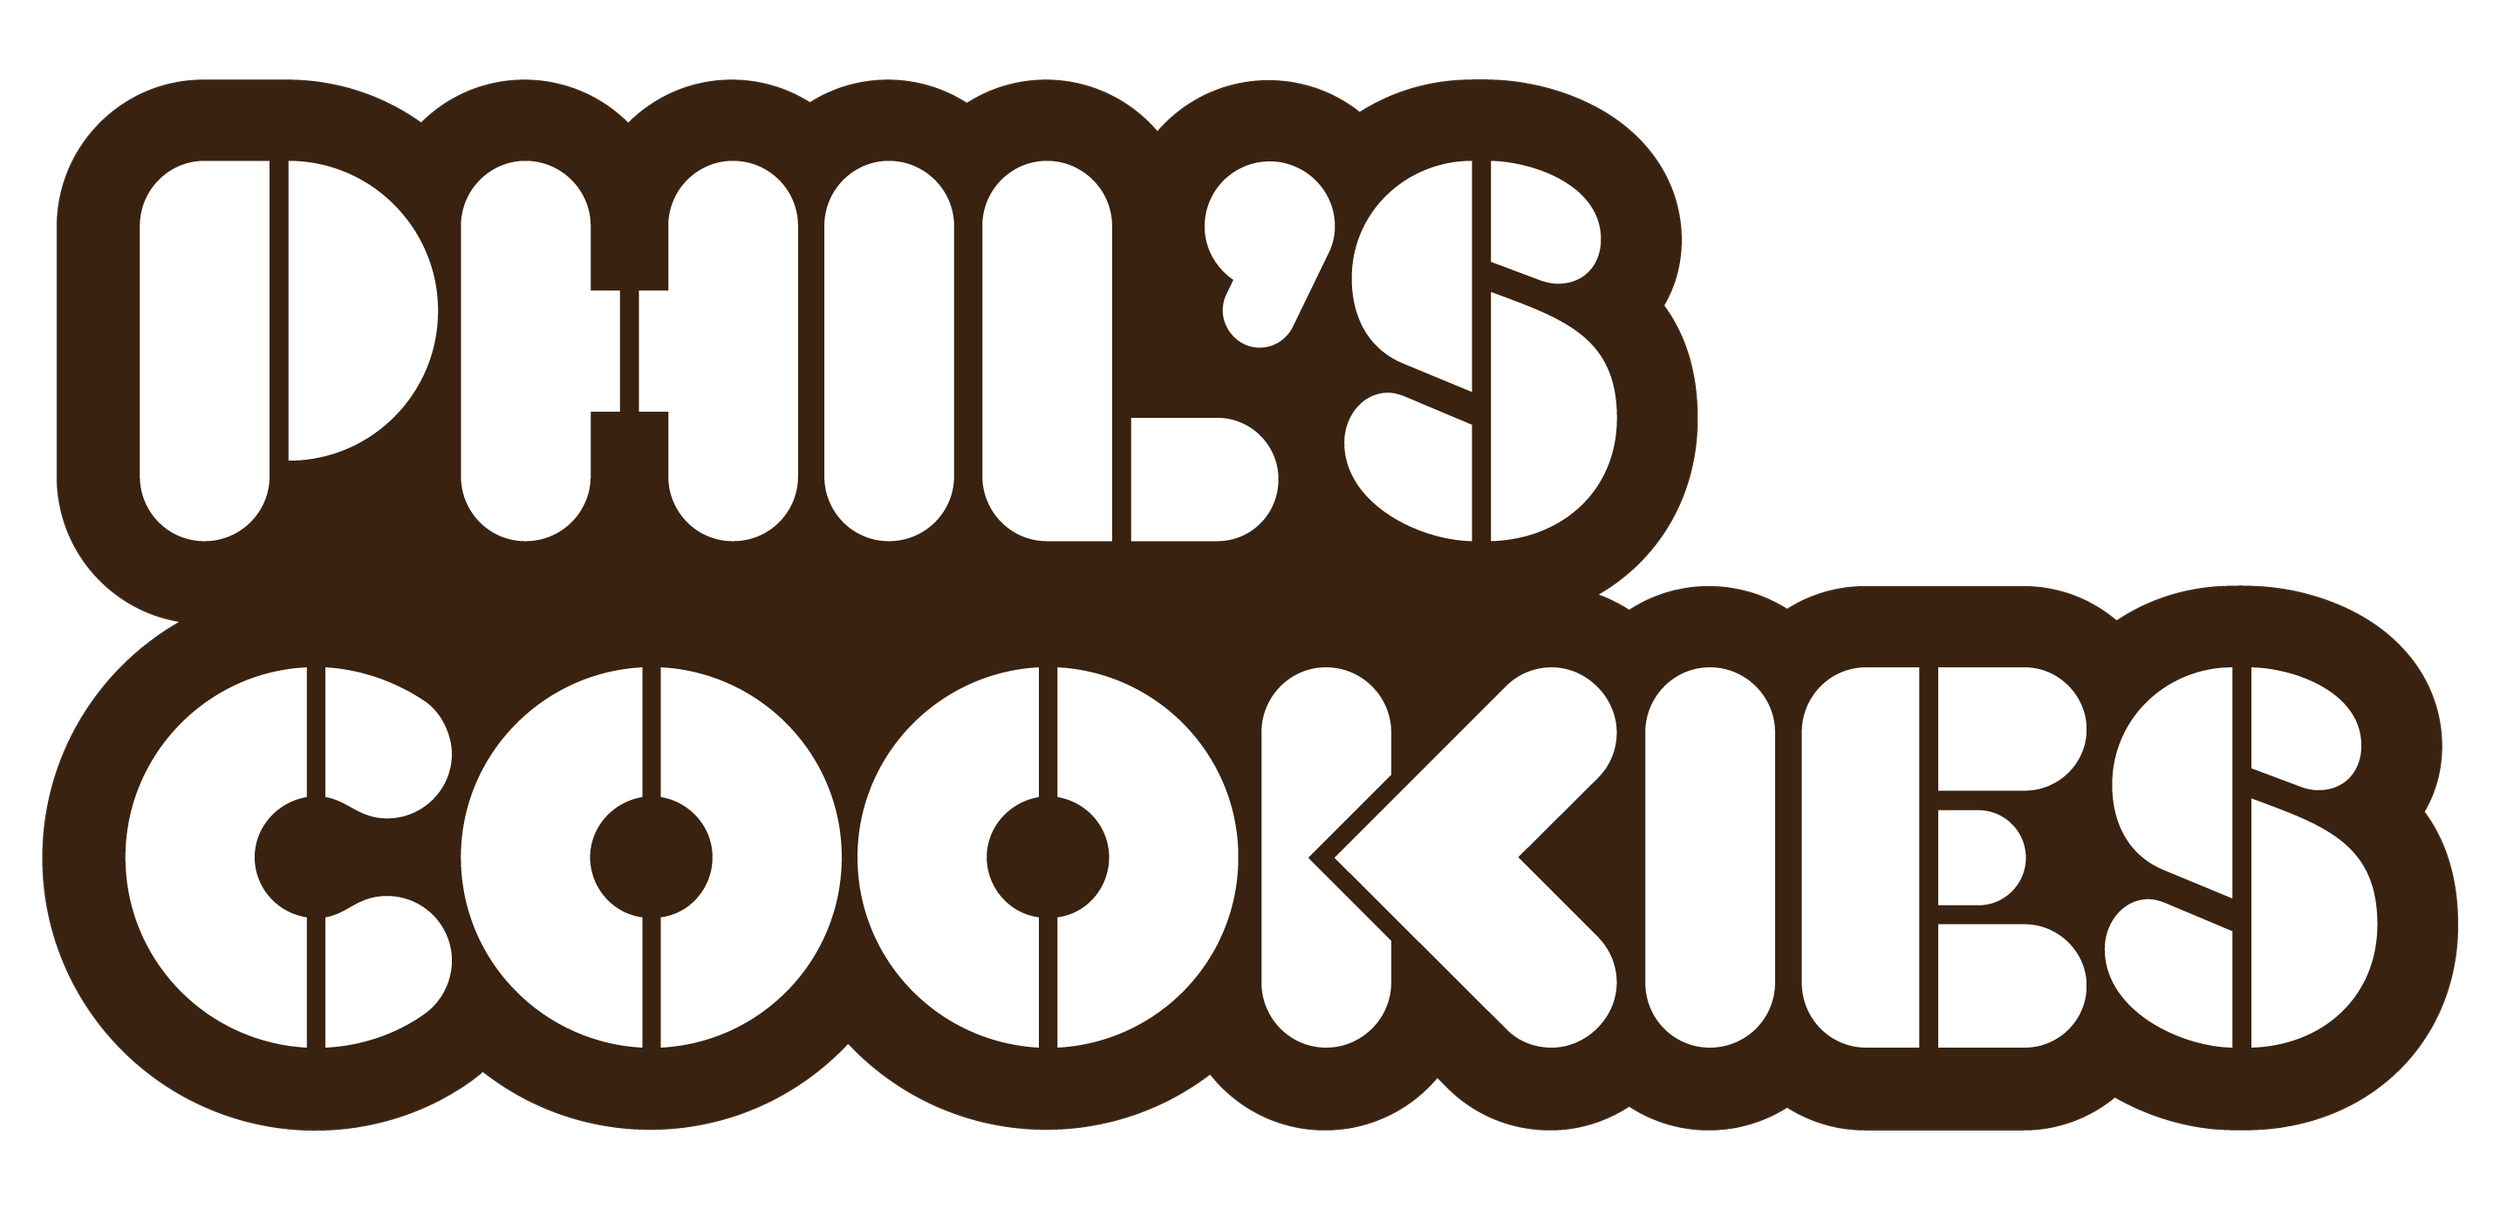 Phils-Cookies.png